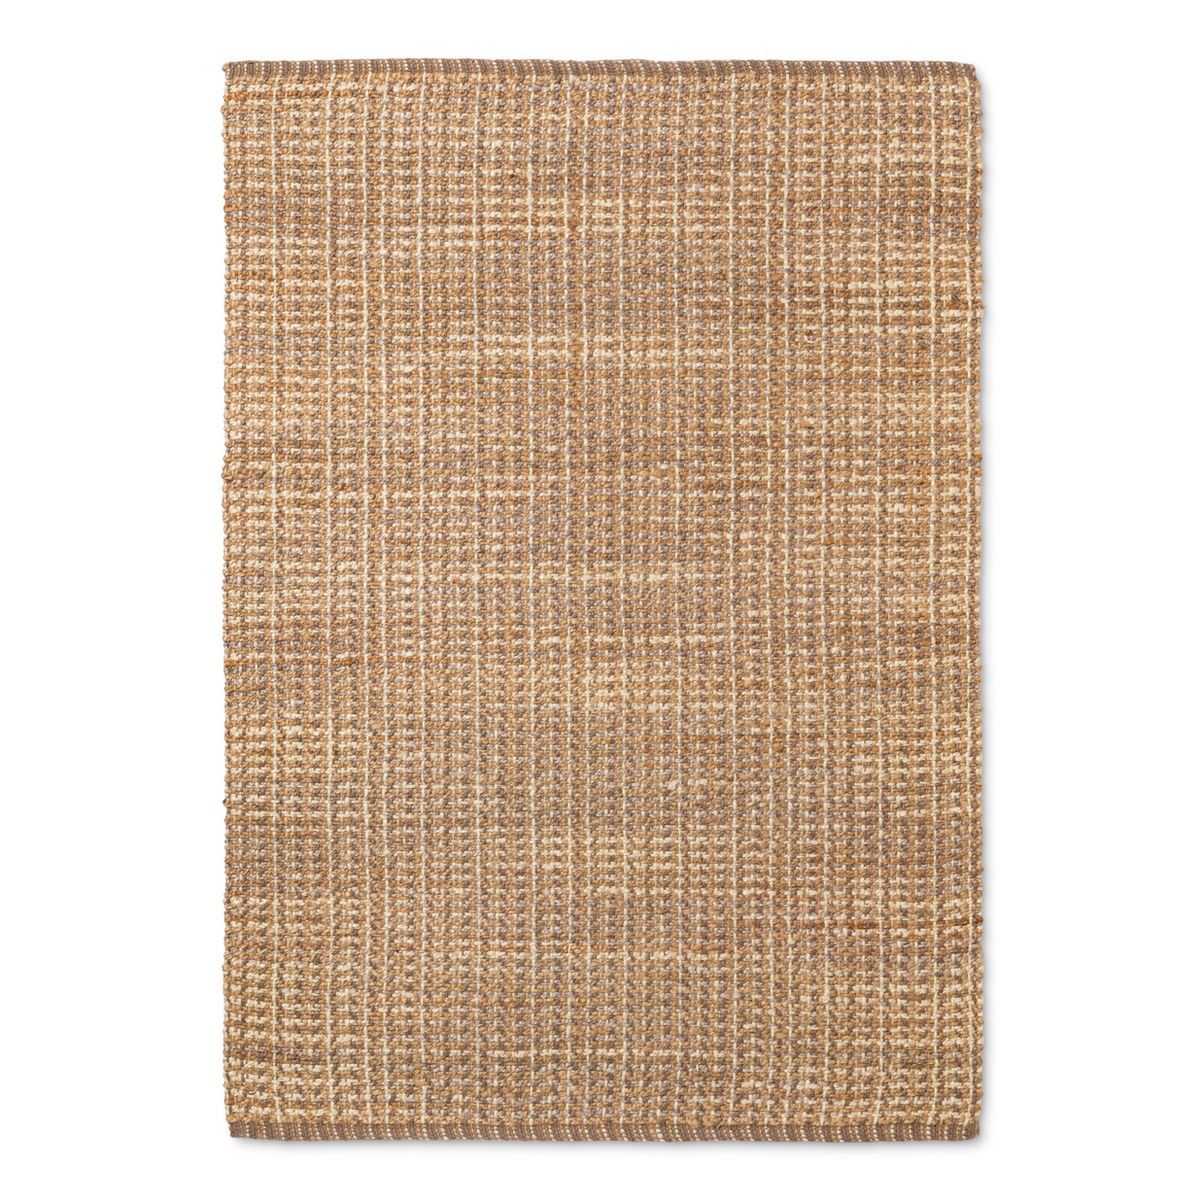 5'x7' Basket Weave Woven Area Rug Natural - Threshold™ | Target